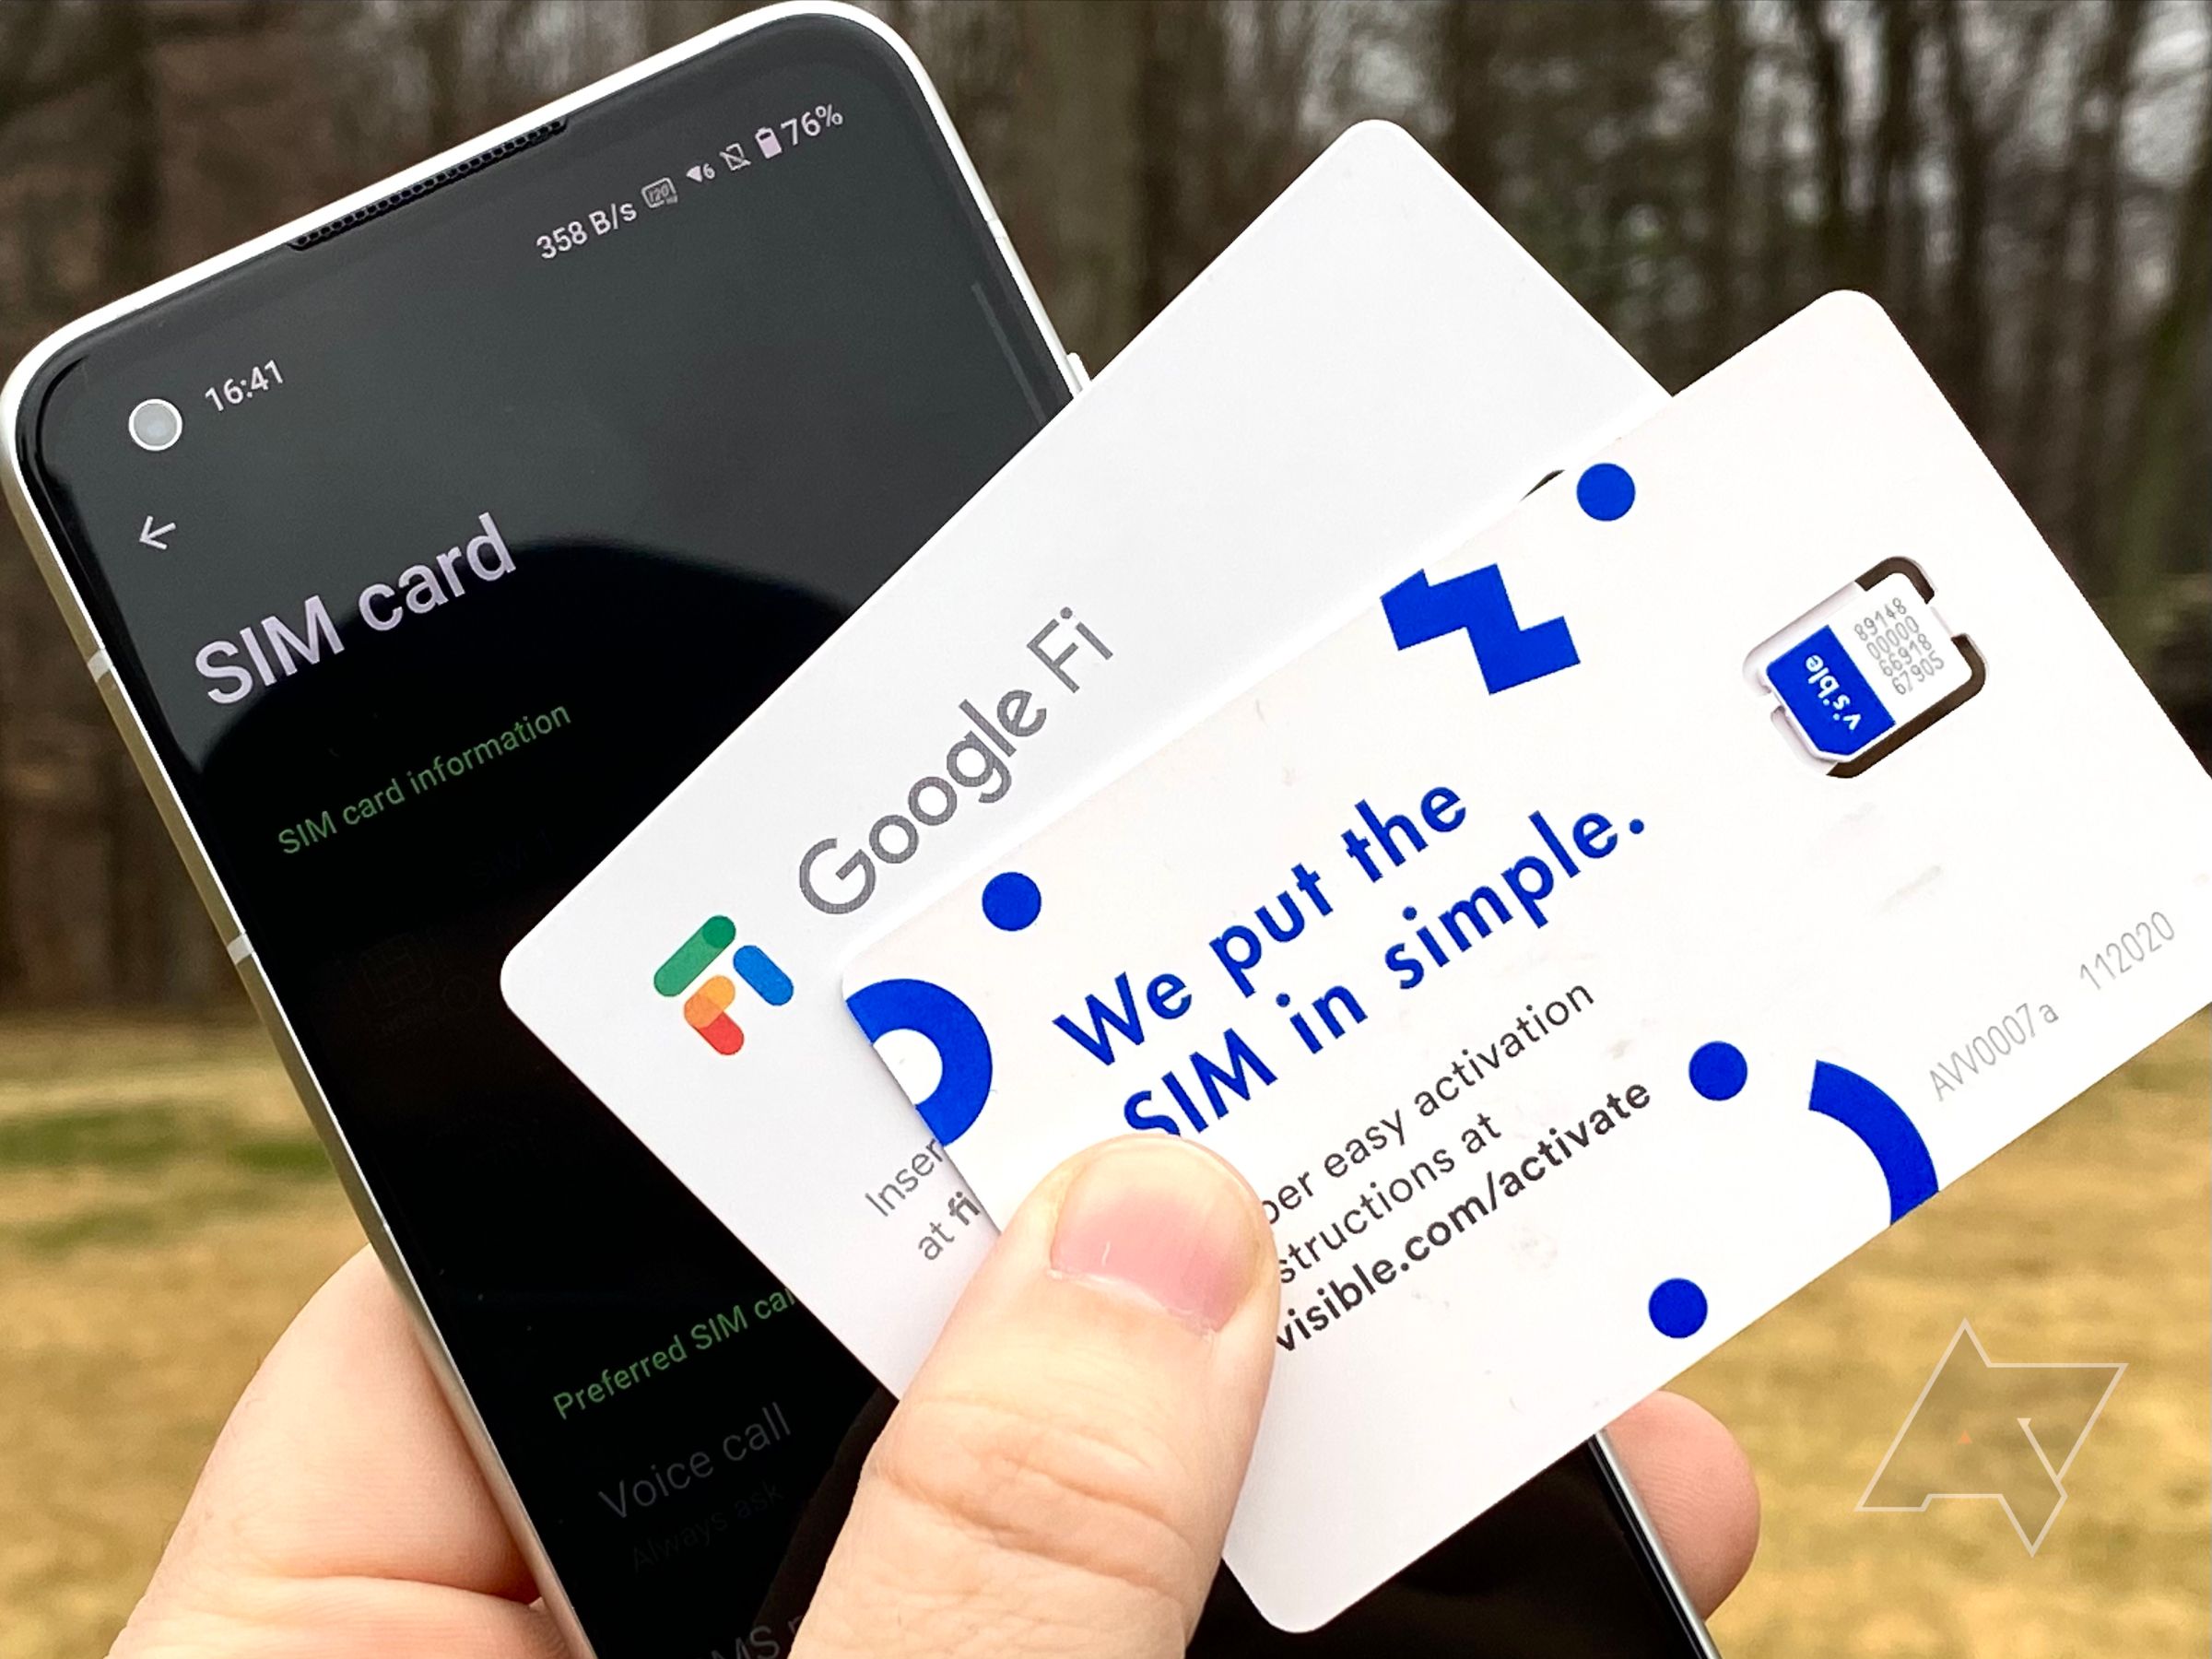 Google Fi and Visible SIM cards